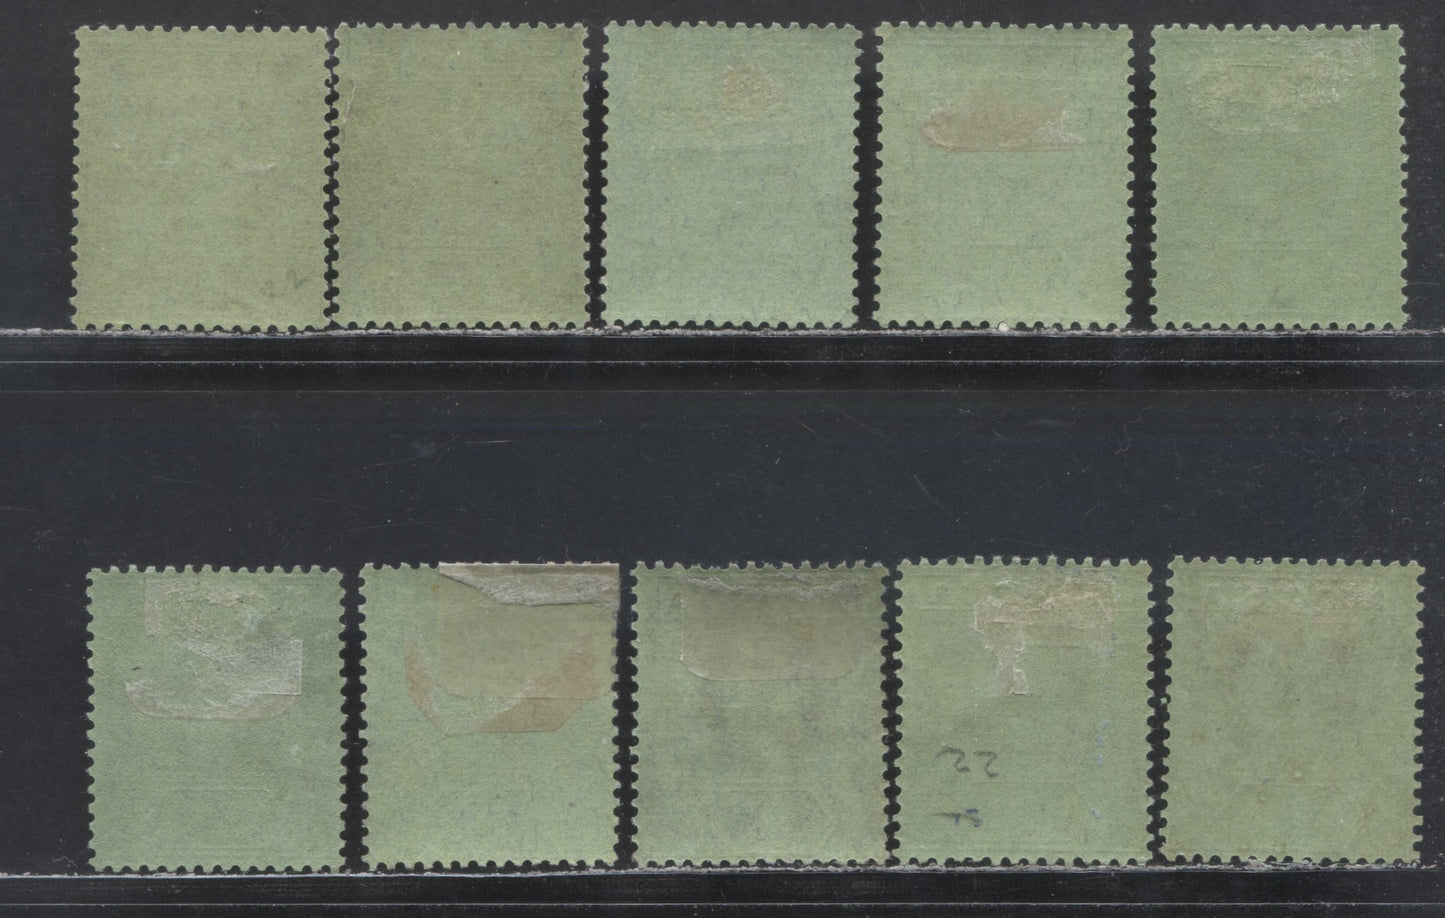 Nigeria SC# 29 (SG# 26) 1/- 1921 - 1933 King George V Imperium Key Plate Issue, Script CA Watermark, 10 Different Printings In Various Shades Of Grey & Black On Emerald, Bluish Emerald, 10 VFOG Singles, 2022 Scott Classic Cat. $72.50 USD